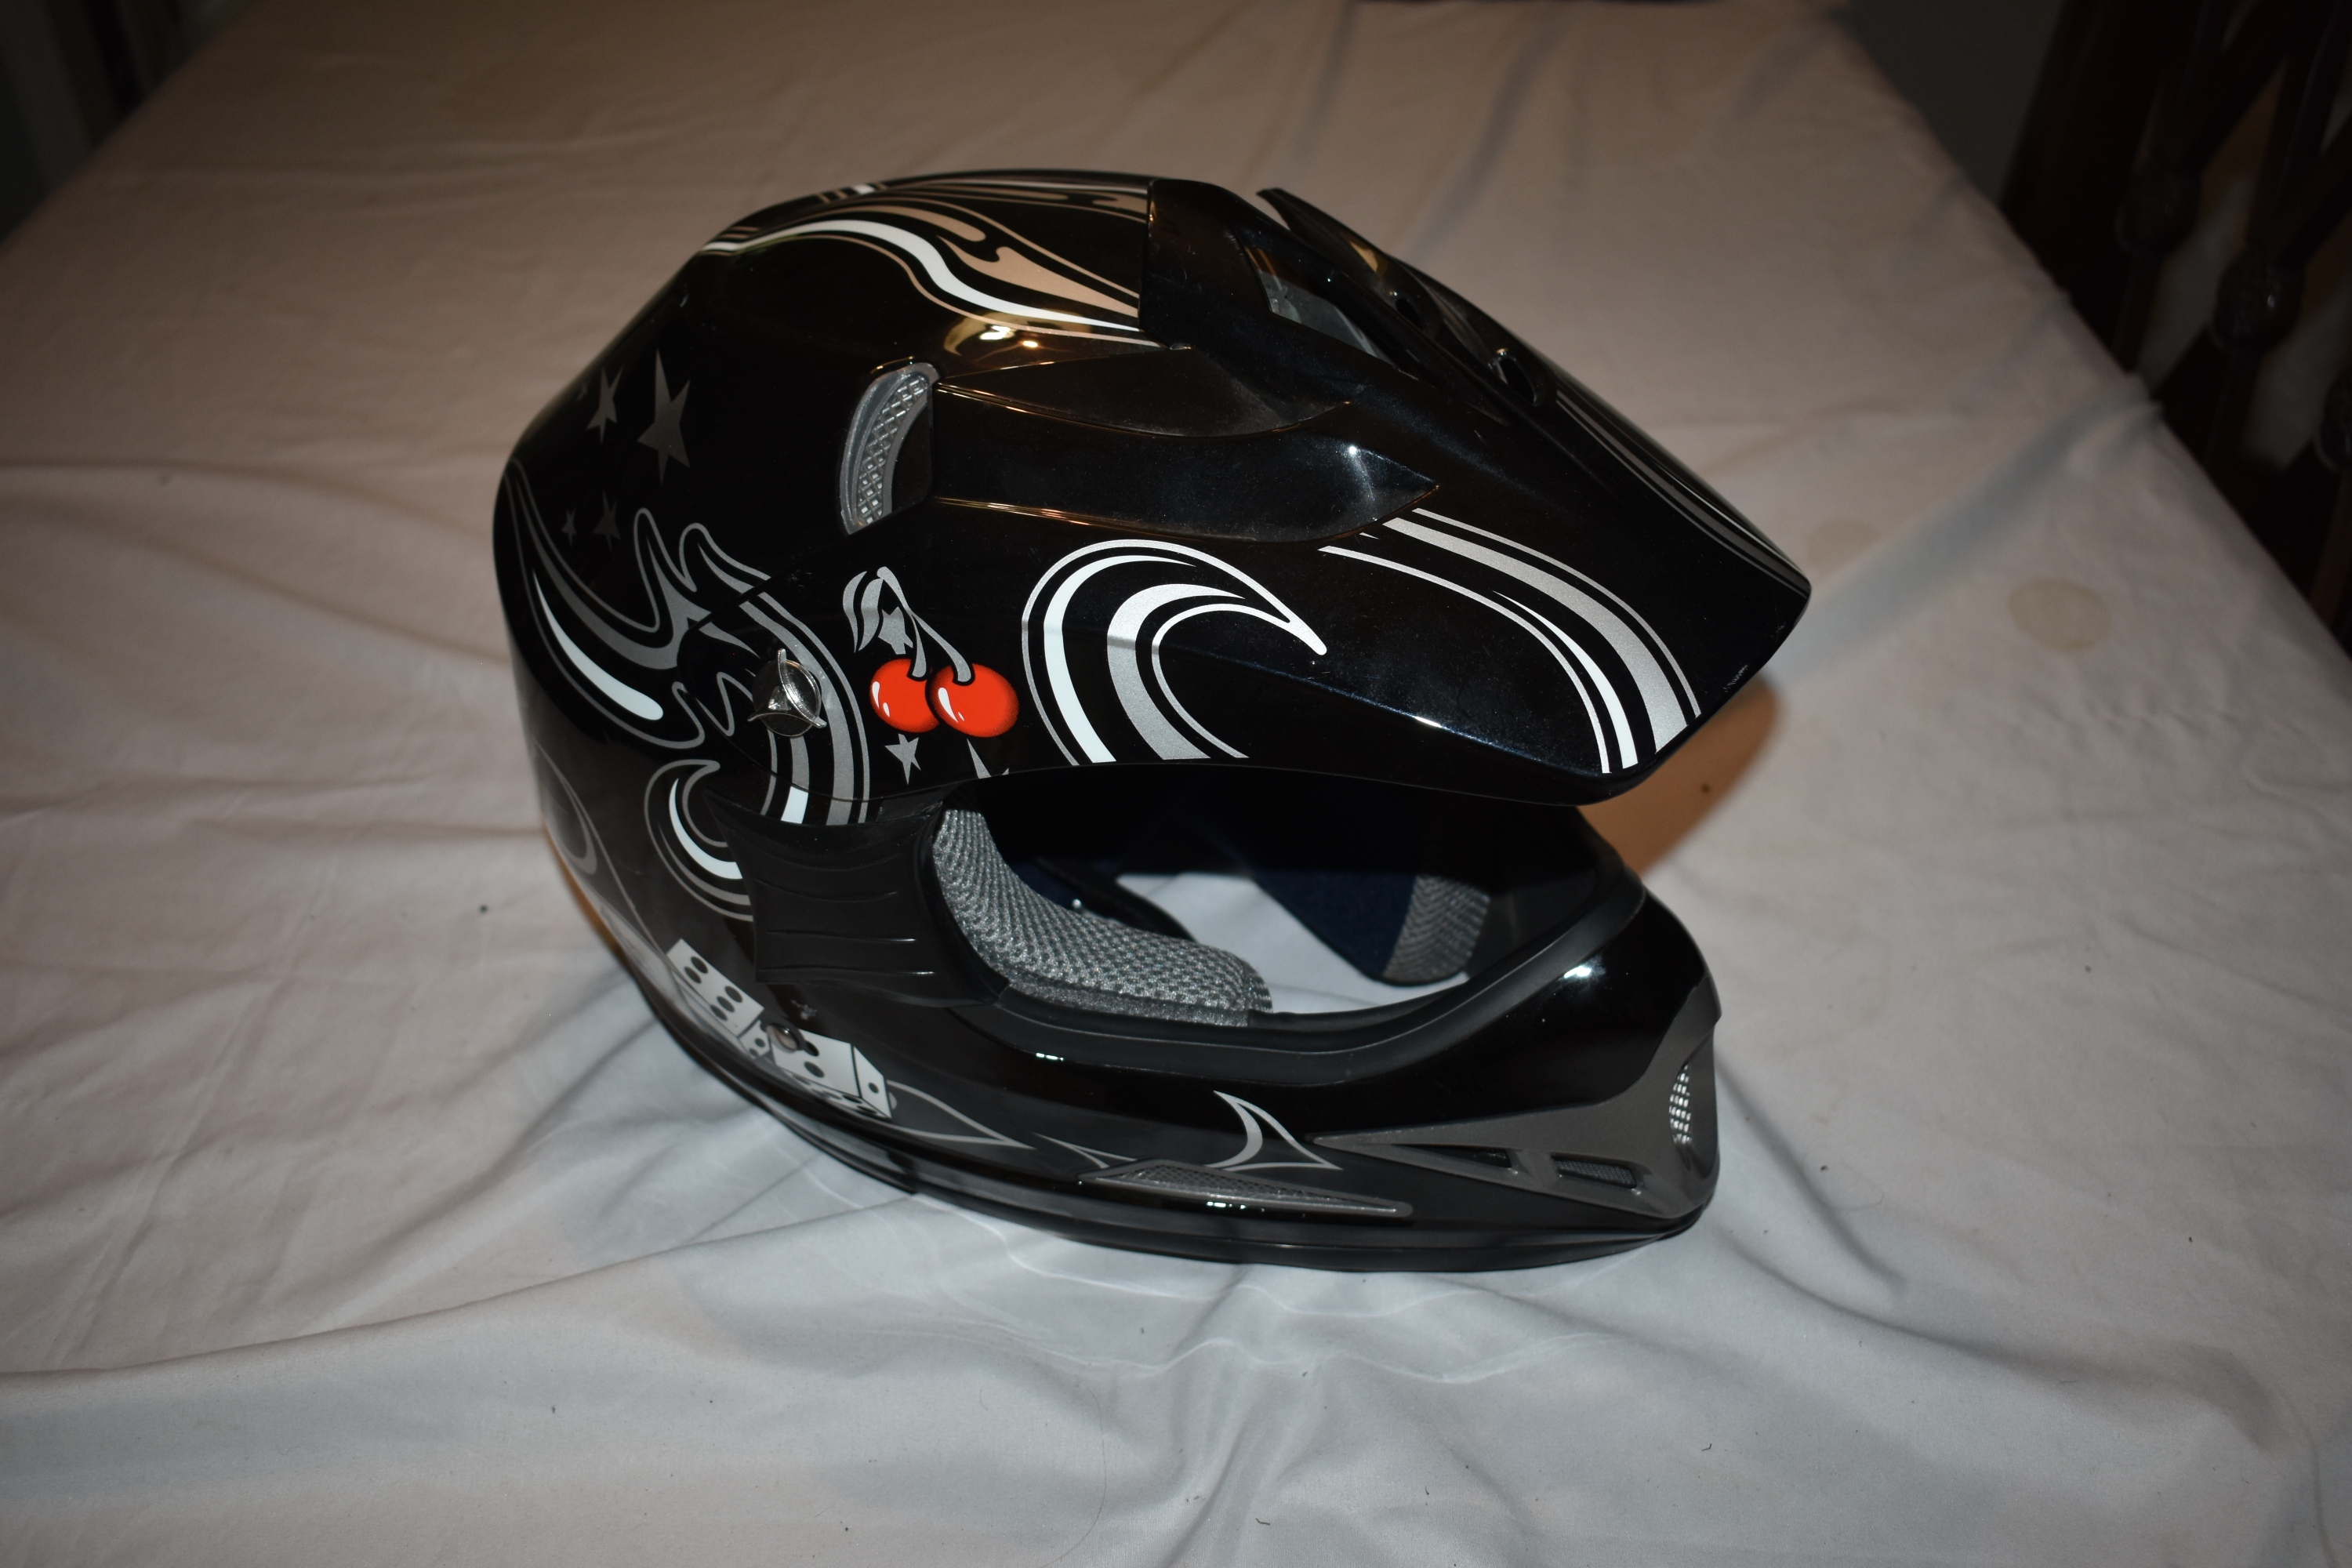 X4 Motocross Helmet, Black, Dice/Cherry/Skull/etc, Adult Medium - Great Condition!